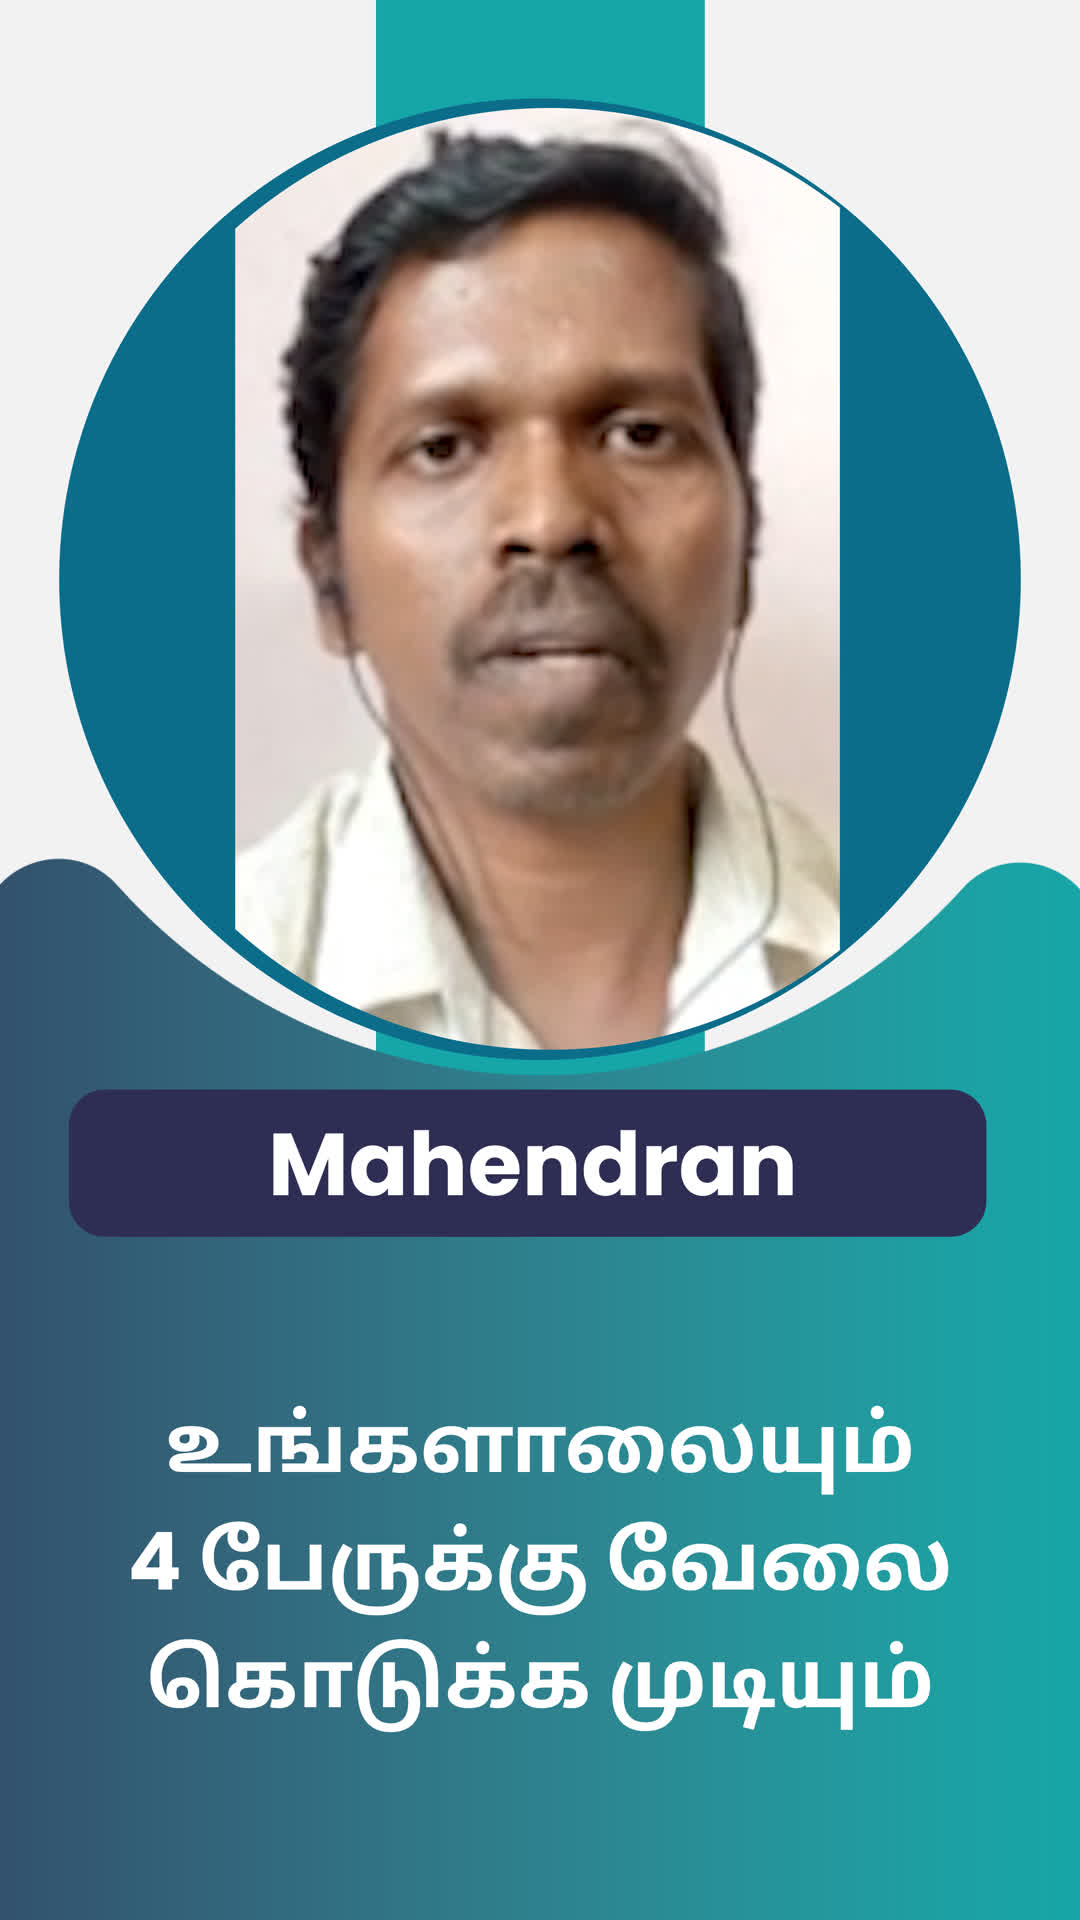 Mahendran J's Honest Review of ffreedom app - Thiruvallur ,Tamil Nadu